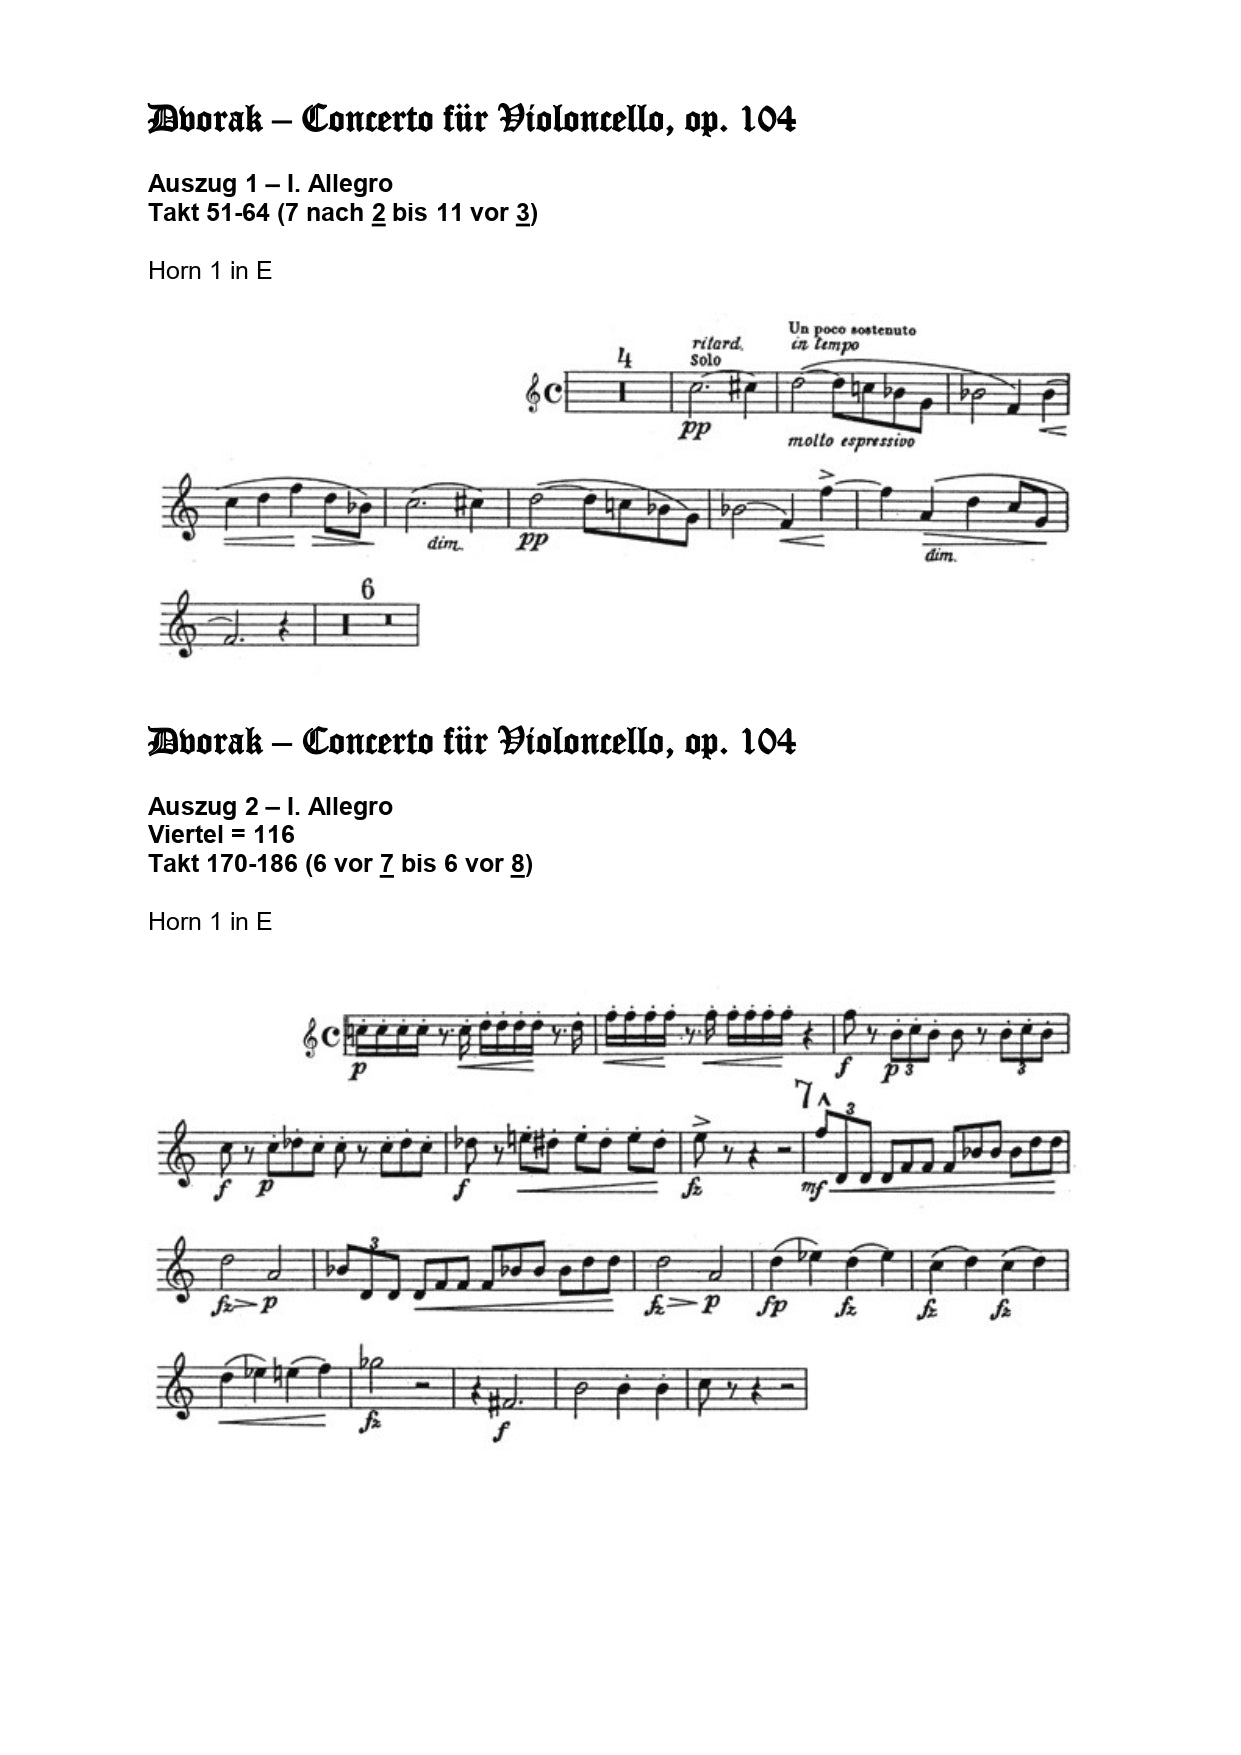 Orchester Studie - Antonin Dvorak - Cello Konzert - Horn 1,2,3,4